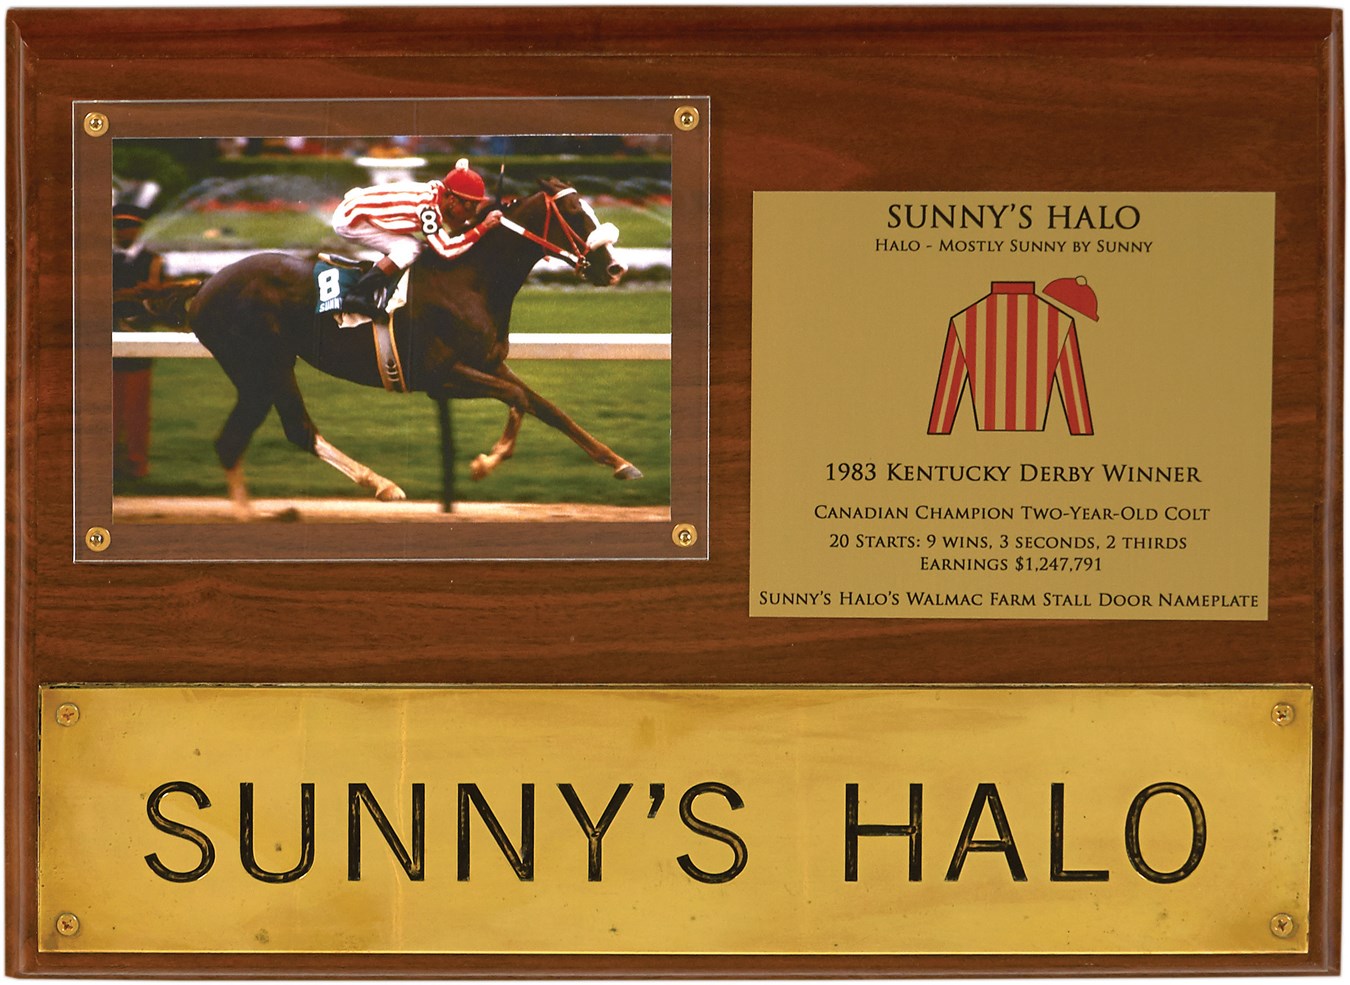 Horse Racing - Sunny's Halo Walmac Farm Stall Door Nameplate